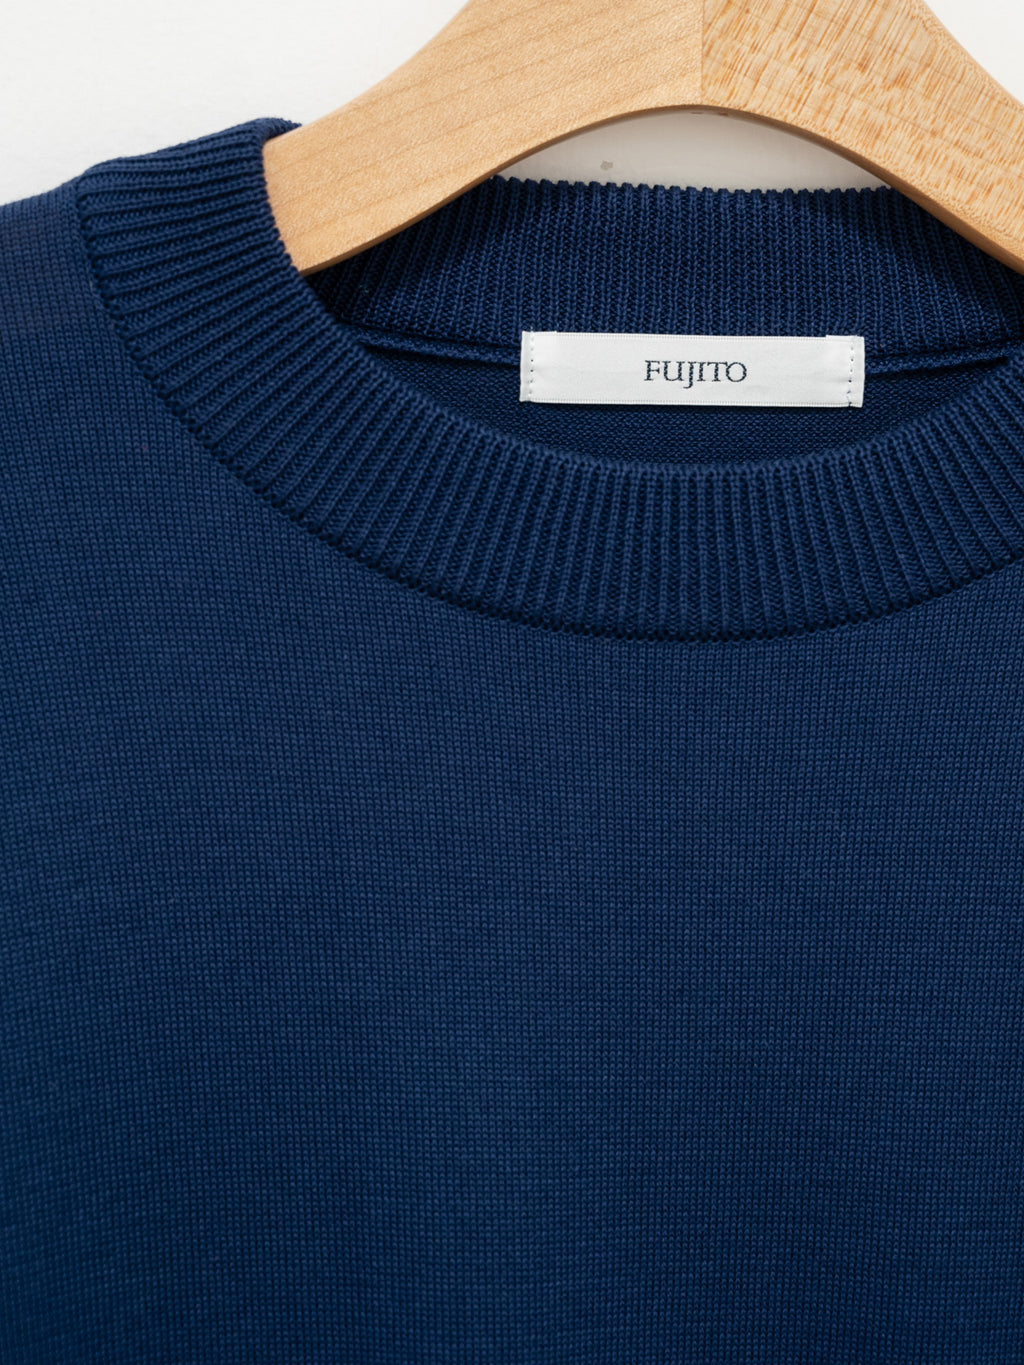 Namu Shop - Fujito Side Rib Sweater - Royal Blue